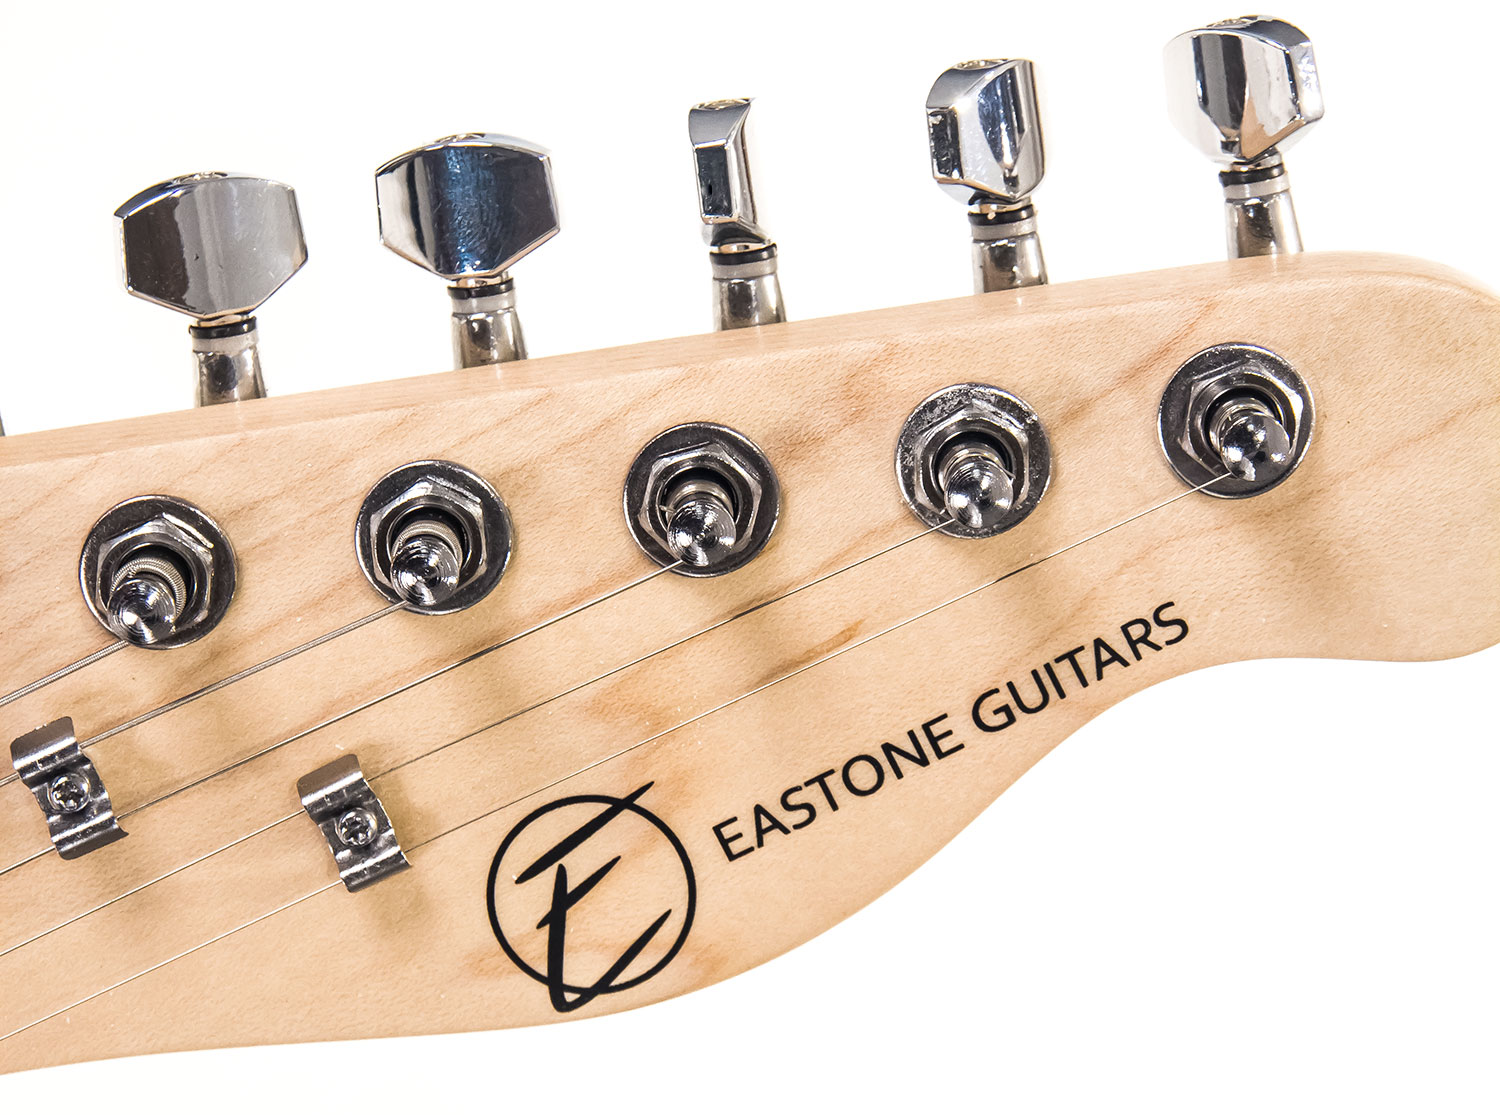 Eastone Tl70 Ss Ht Pur - 3 Tone Sunburst - Tel shape electric guitar - Variation 4